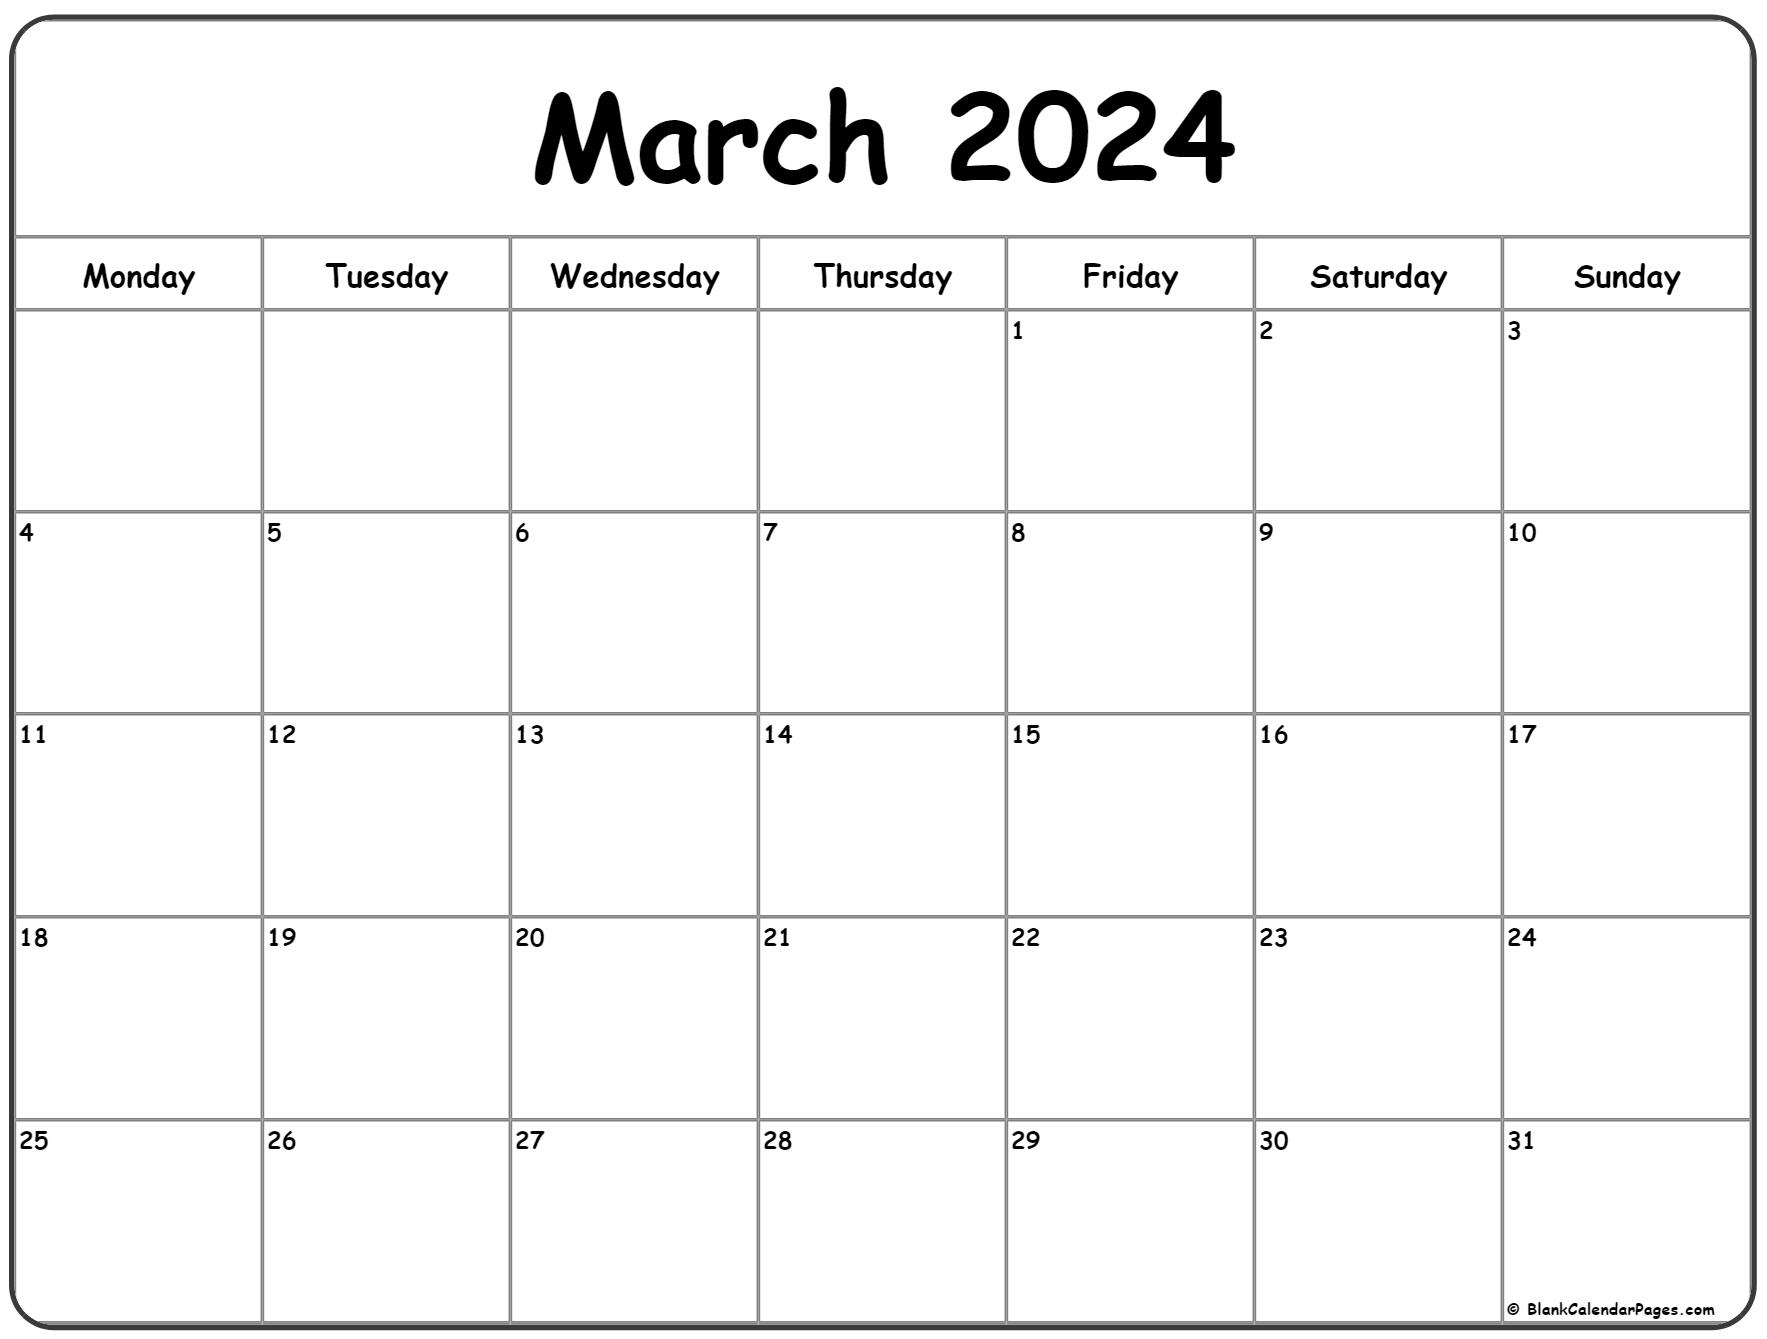 March 2024 Monday Calendar | Monday To Sunday for March 2024 Printable Calendar